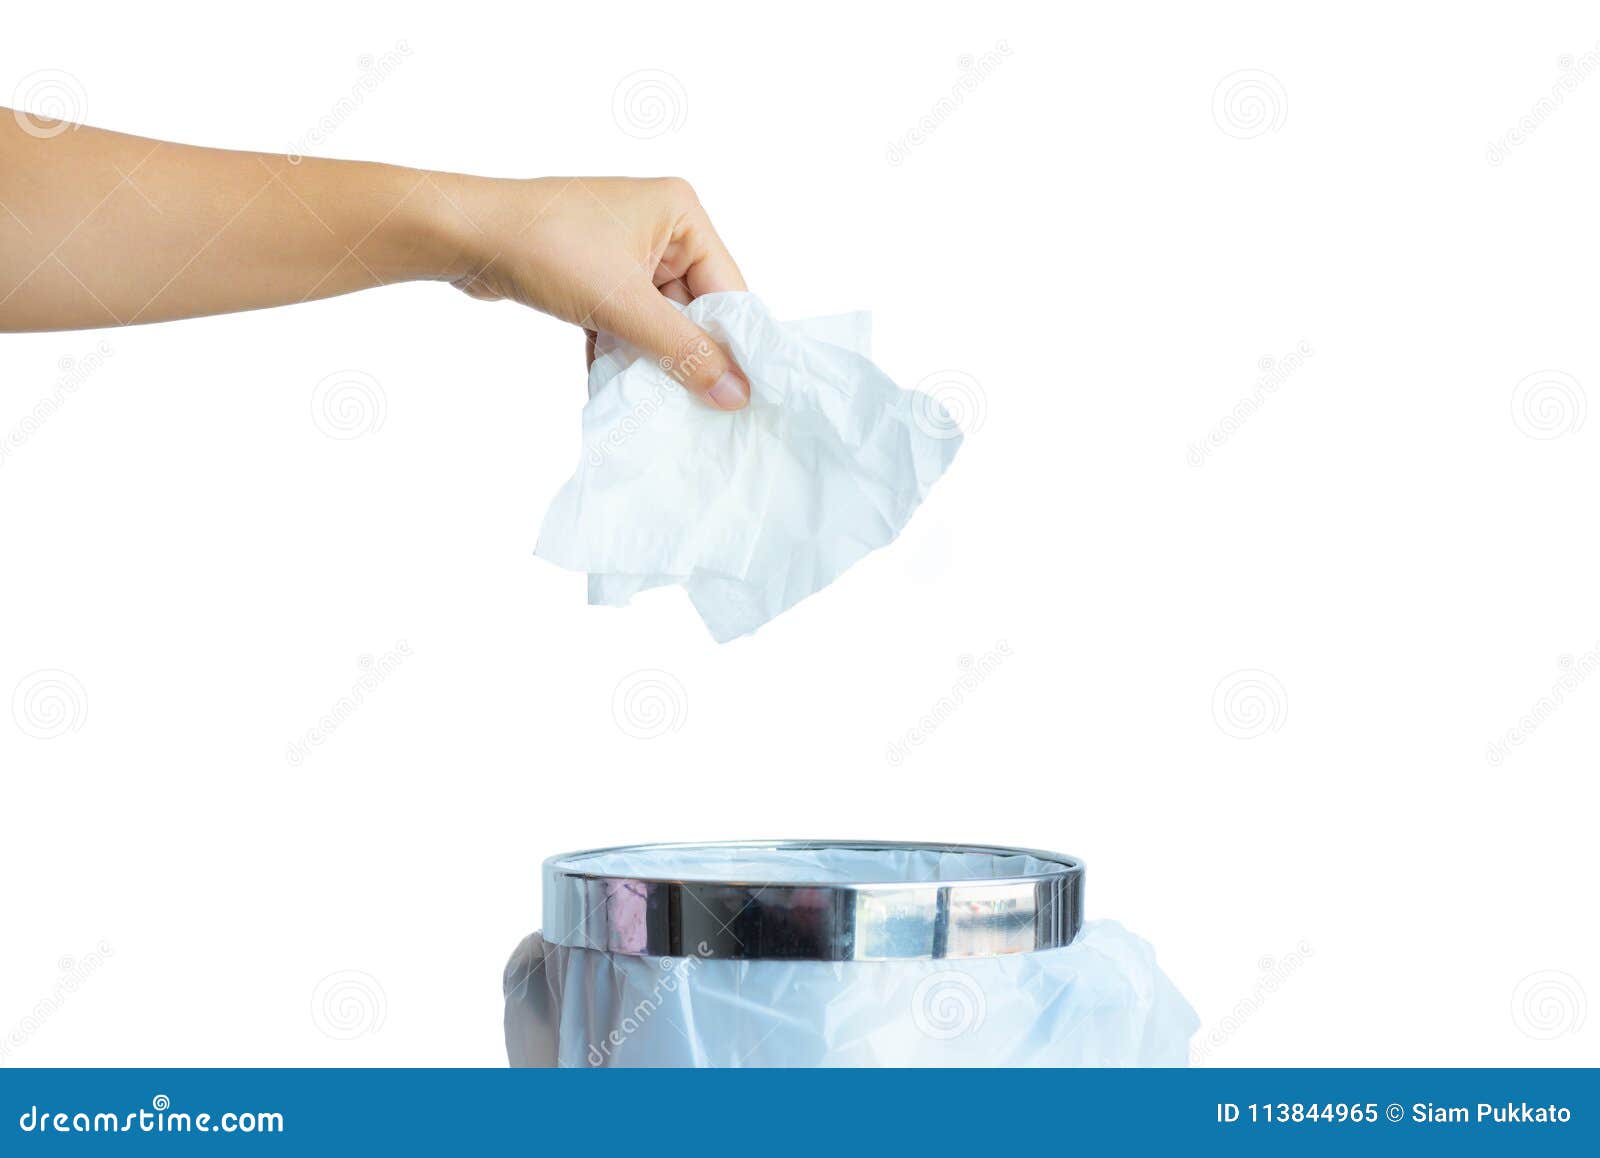 women hand throwing white tissue paper in to a trash bin